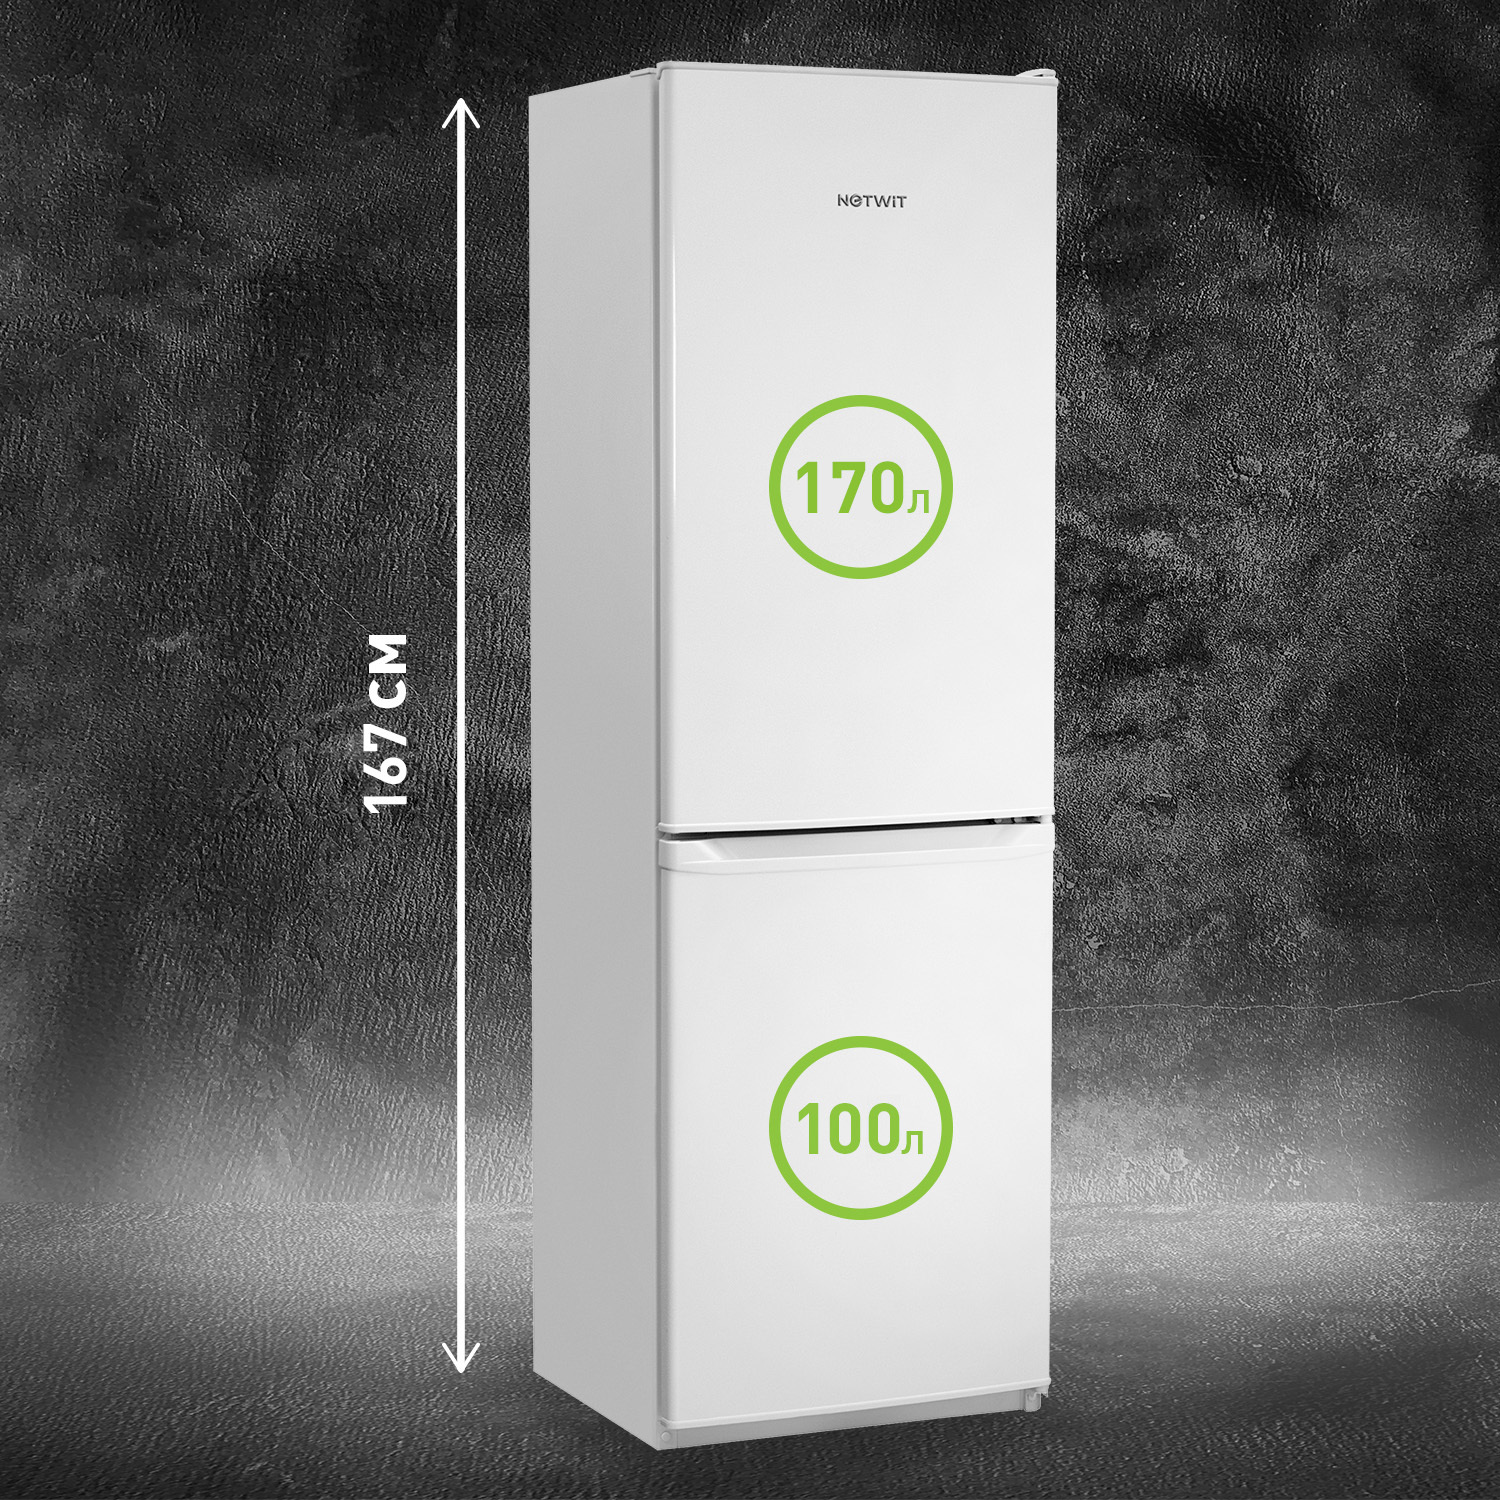 Net wit. Холодильник Harper HRF-t140m. Холодильник NETWIT. Бирюса 125rs. NETWIT RBU 190 w10u.